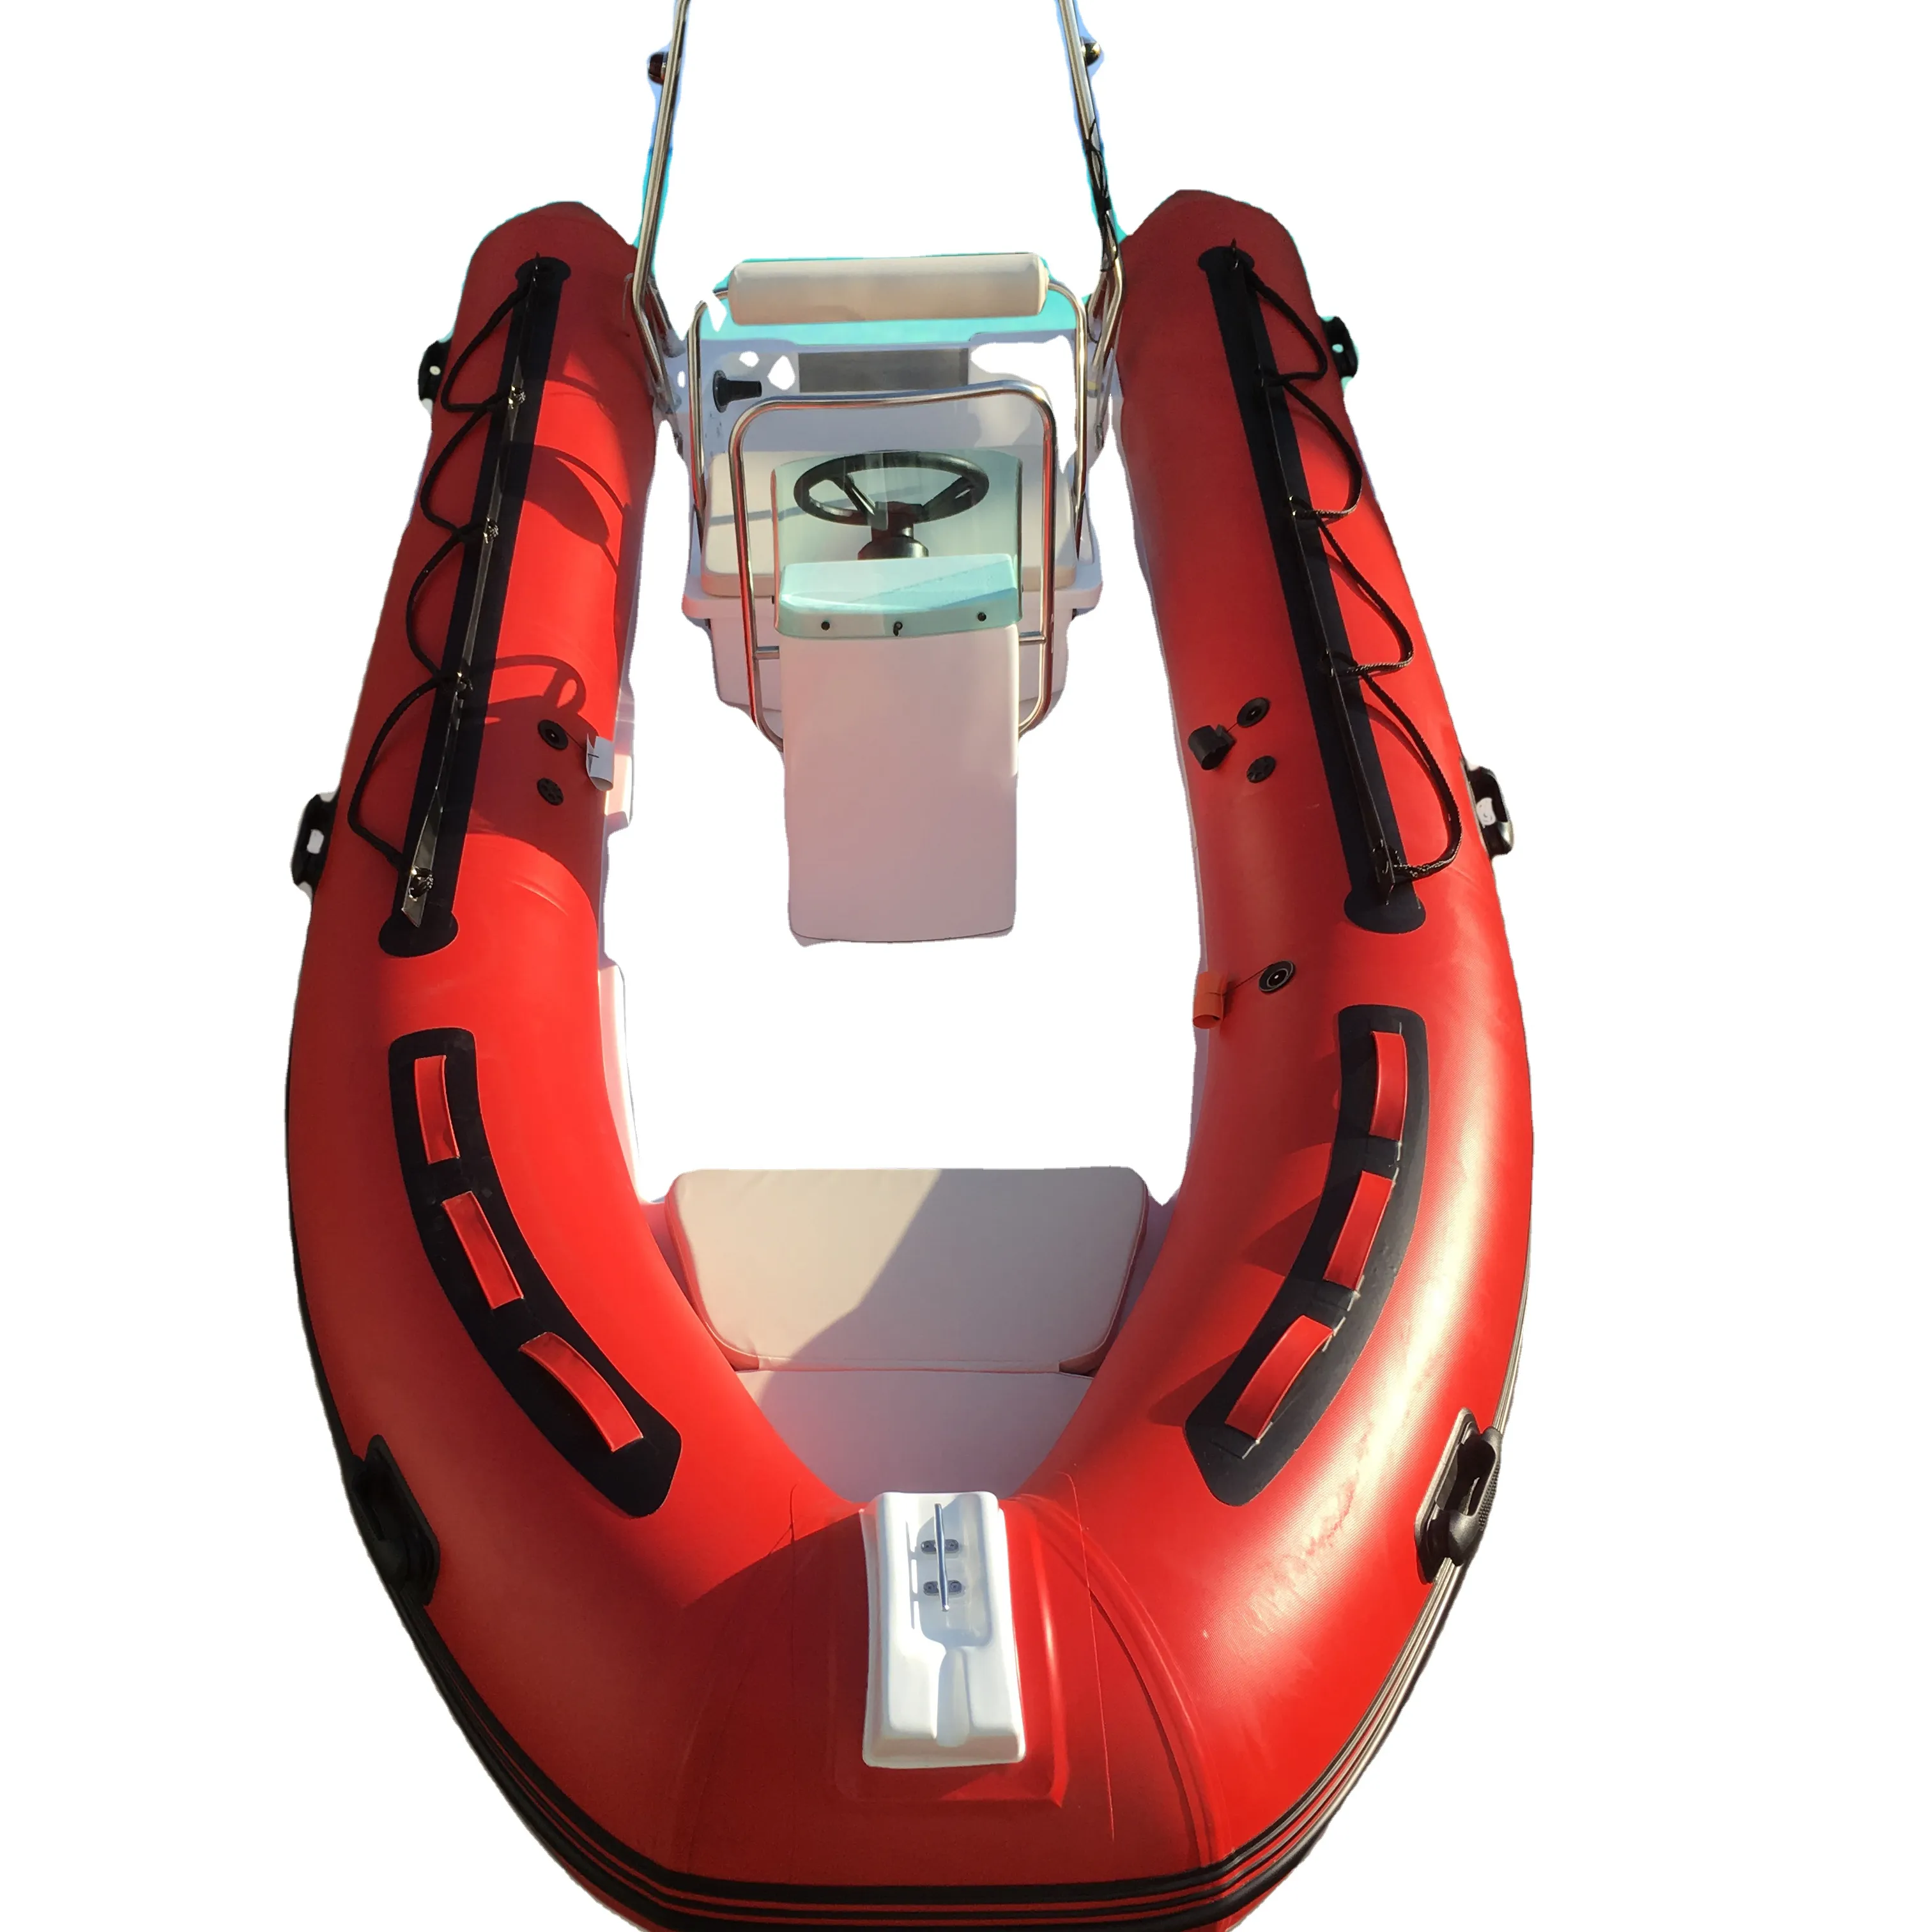 Bote de rescate de casco de fibra de vidrio de 420cm, yate, bote, bote inflable